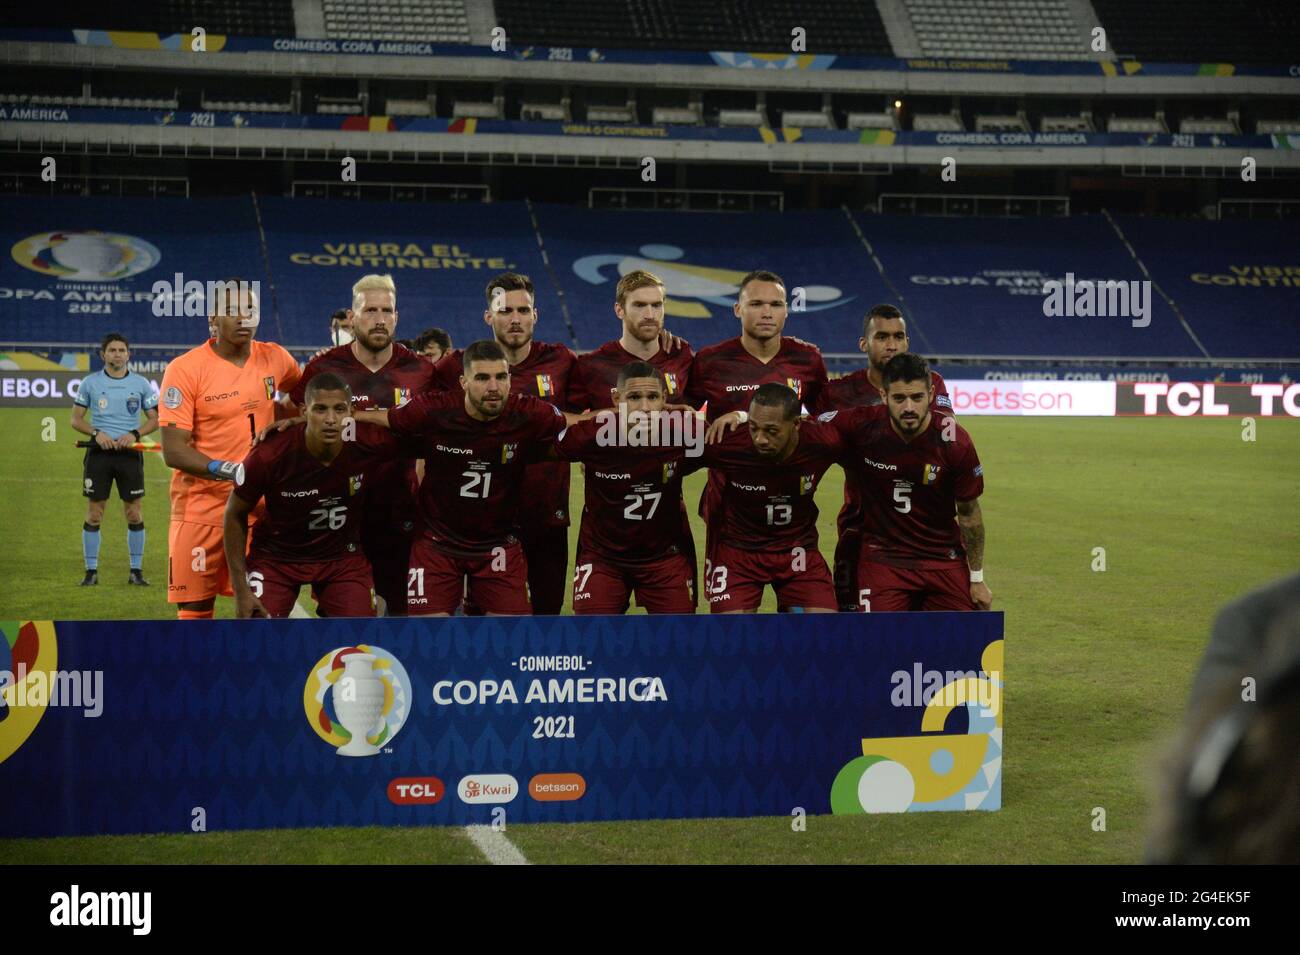 Venezuela's player pose for a team photo prior to a Copa America soccer match against Ecuador at the Nilton Santos stadium in Rio de Janeiro, Brazil Stock Photo